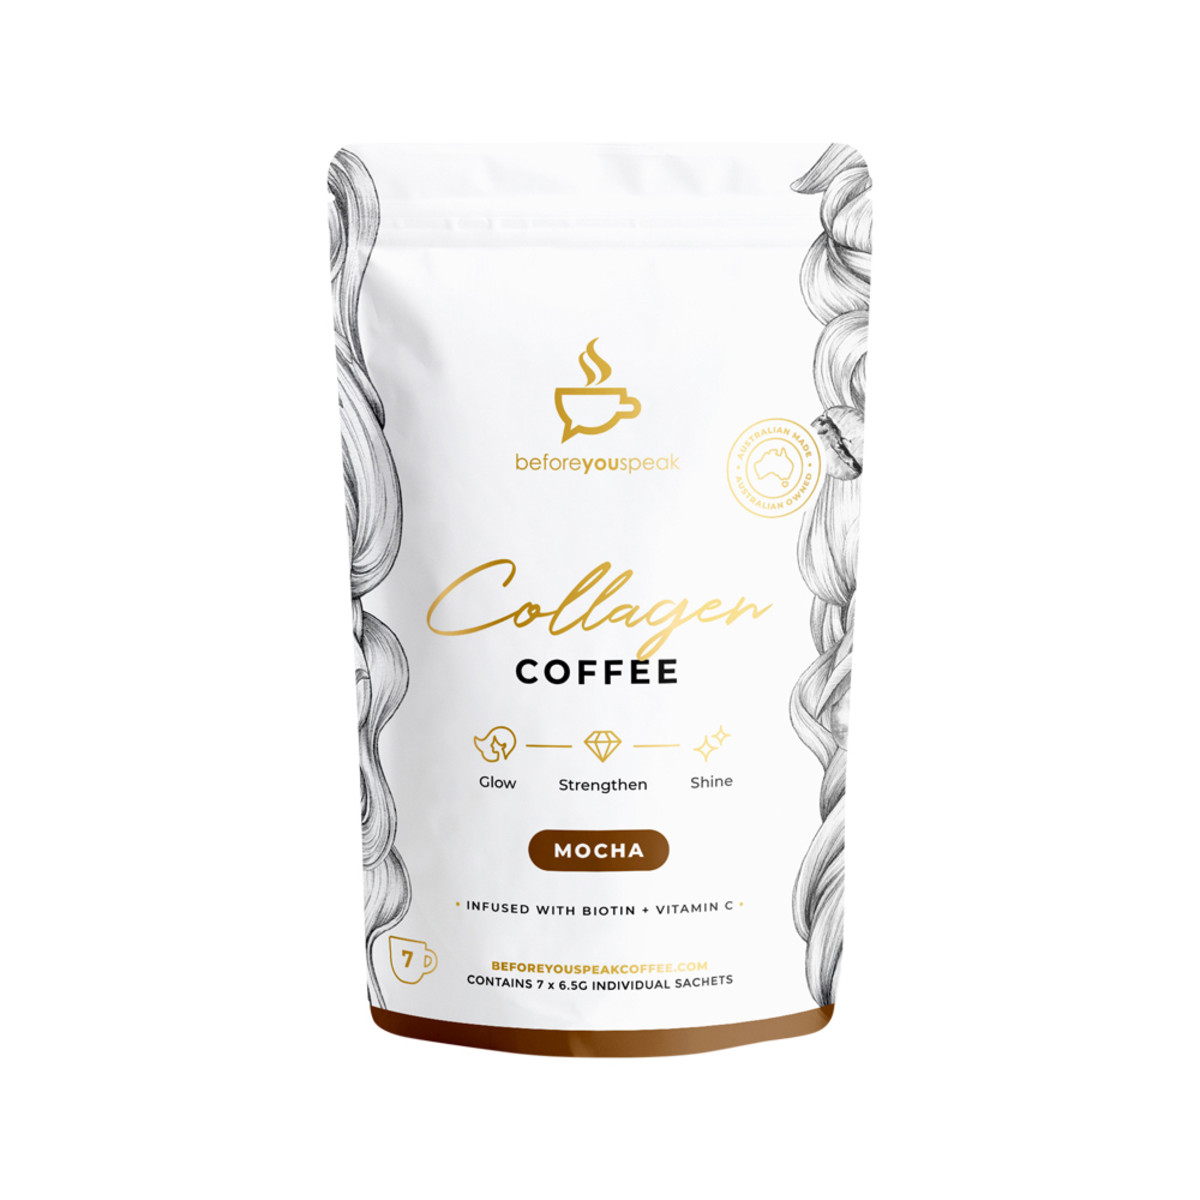 BEFORE YOU SPEAK - Collagen Coffee Mocha 7 Pack